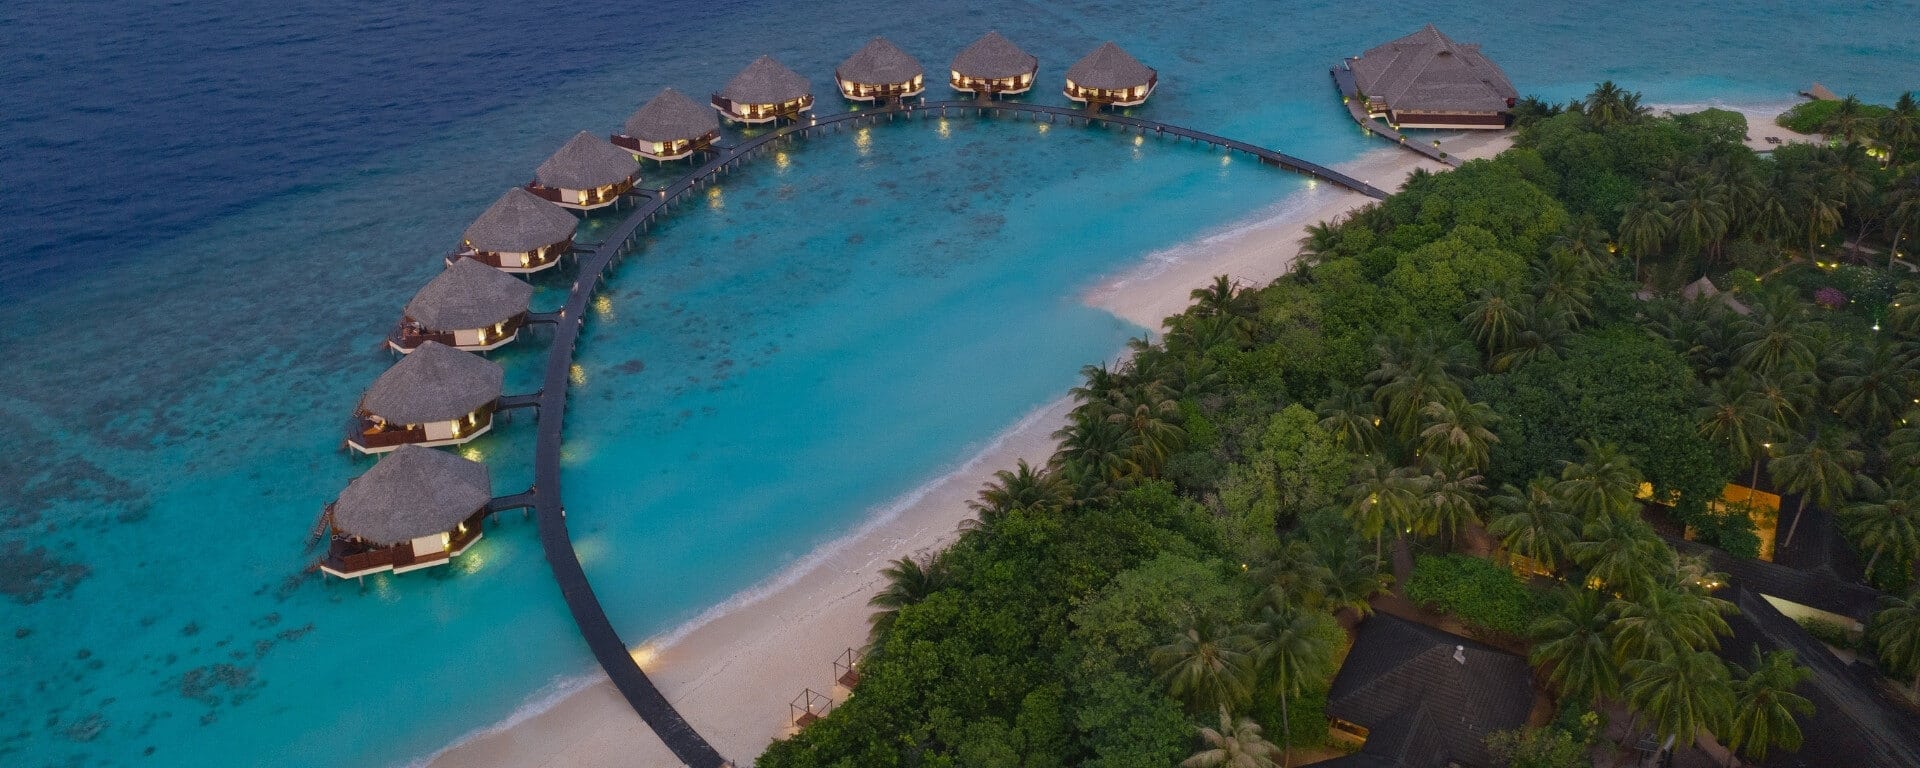 Maldives Meedhupparu Aerial View